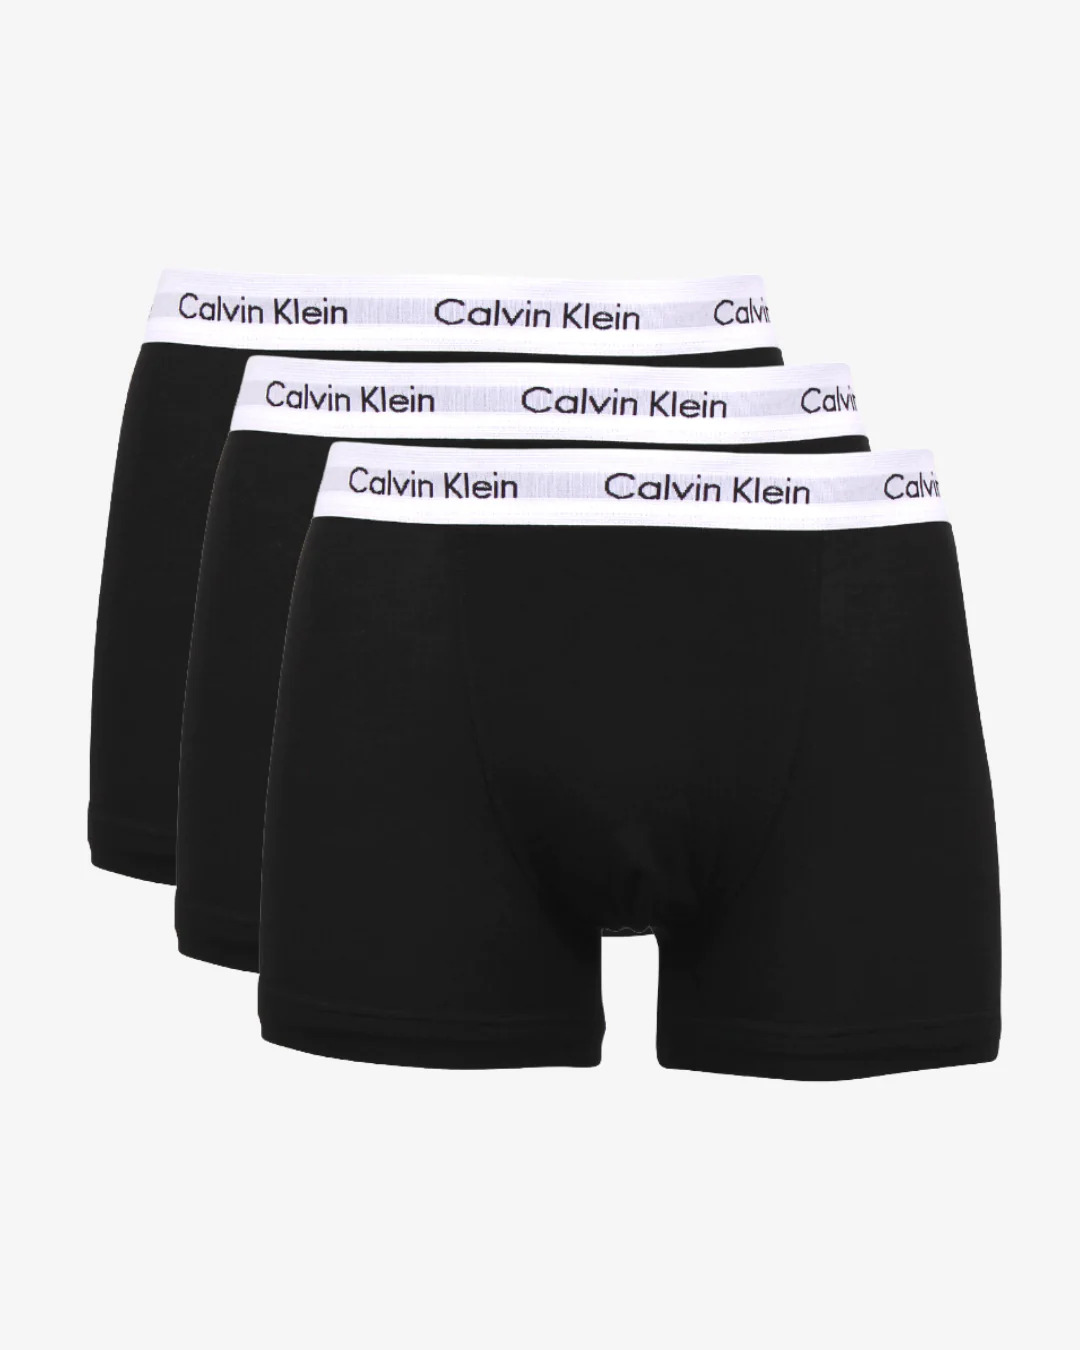 Billede af Calvin Klein Underbukser 3 pak - Sort Medium hos monomen